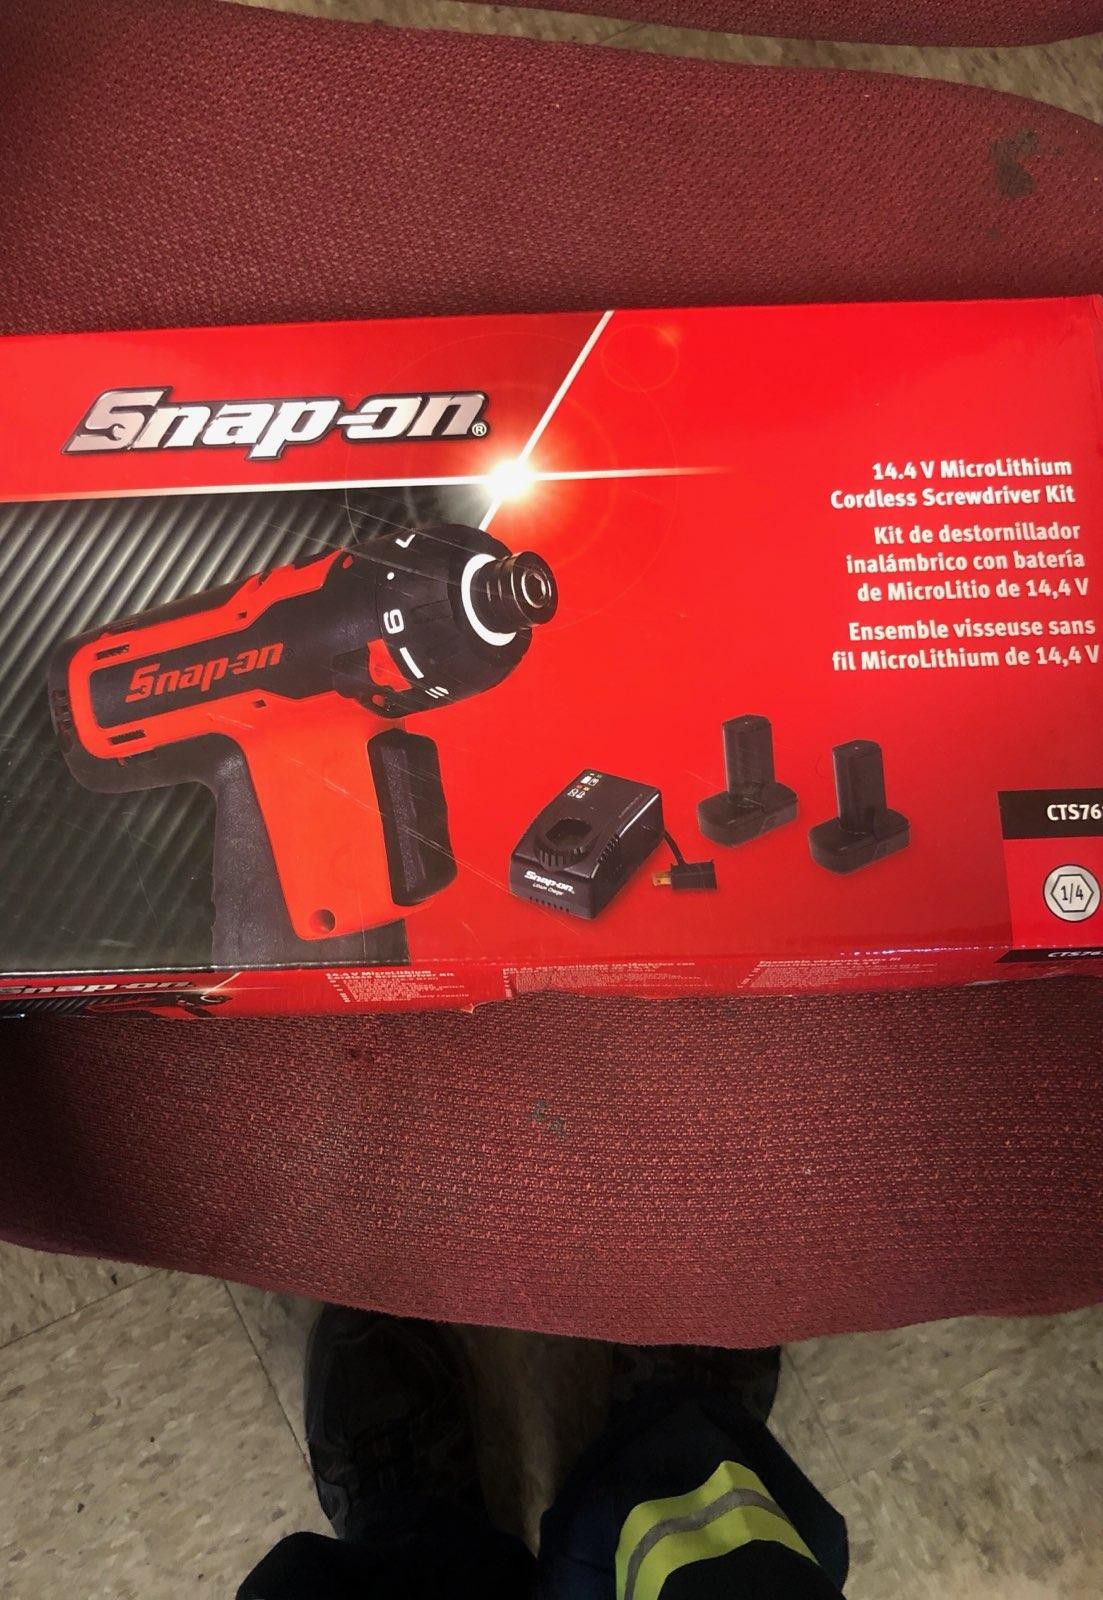 Snap-on cordless screwdriver kit